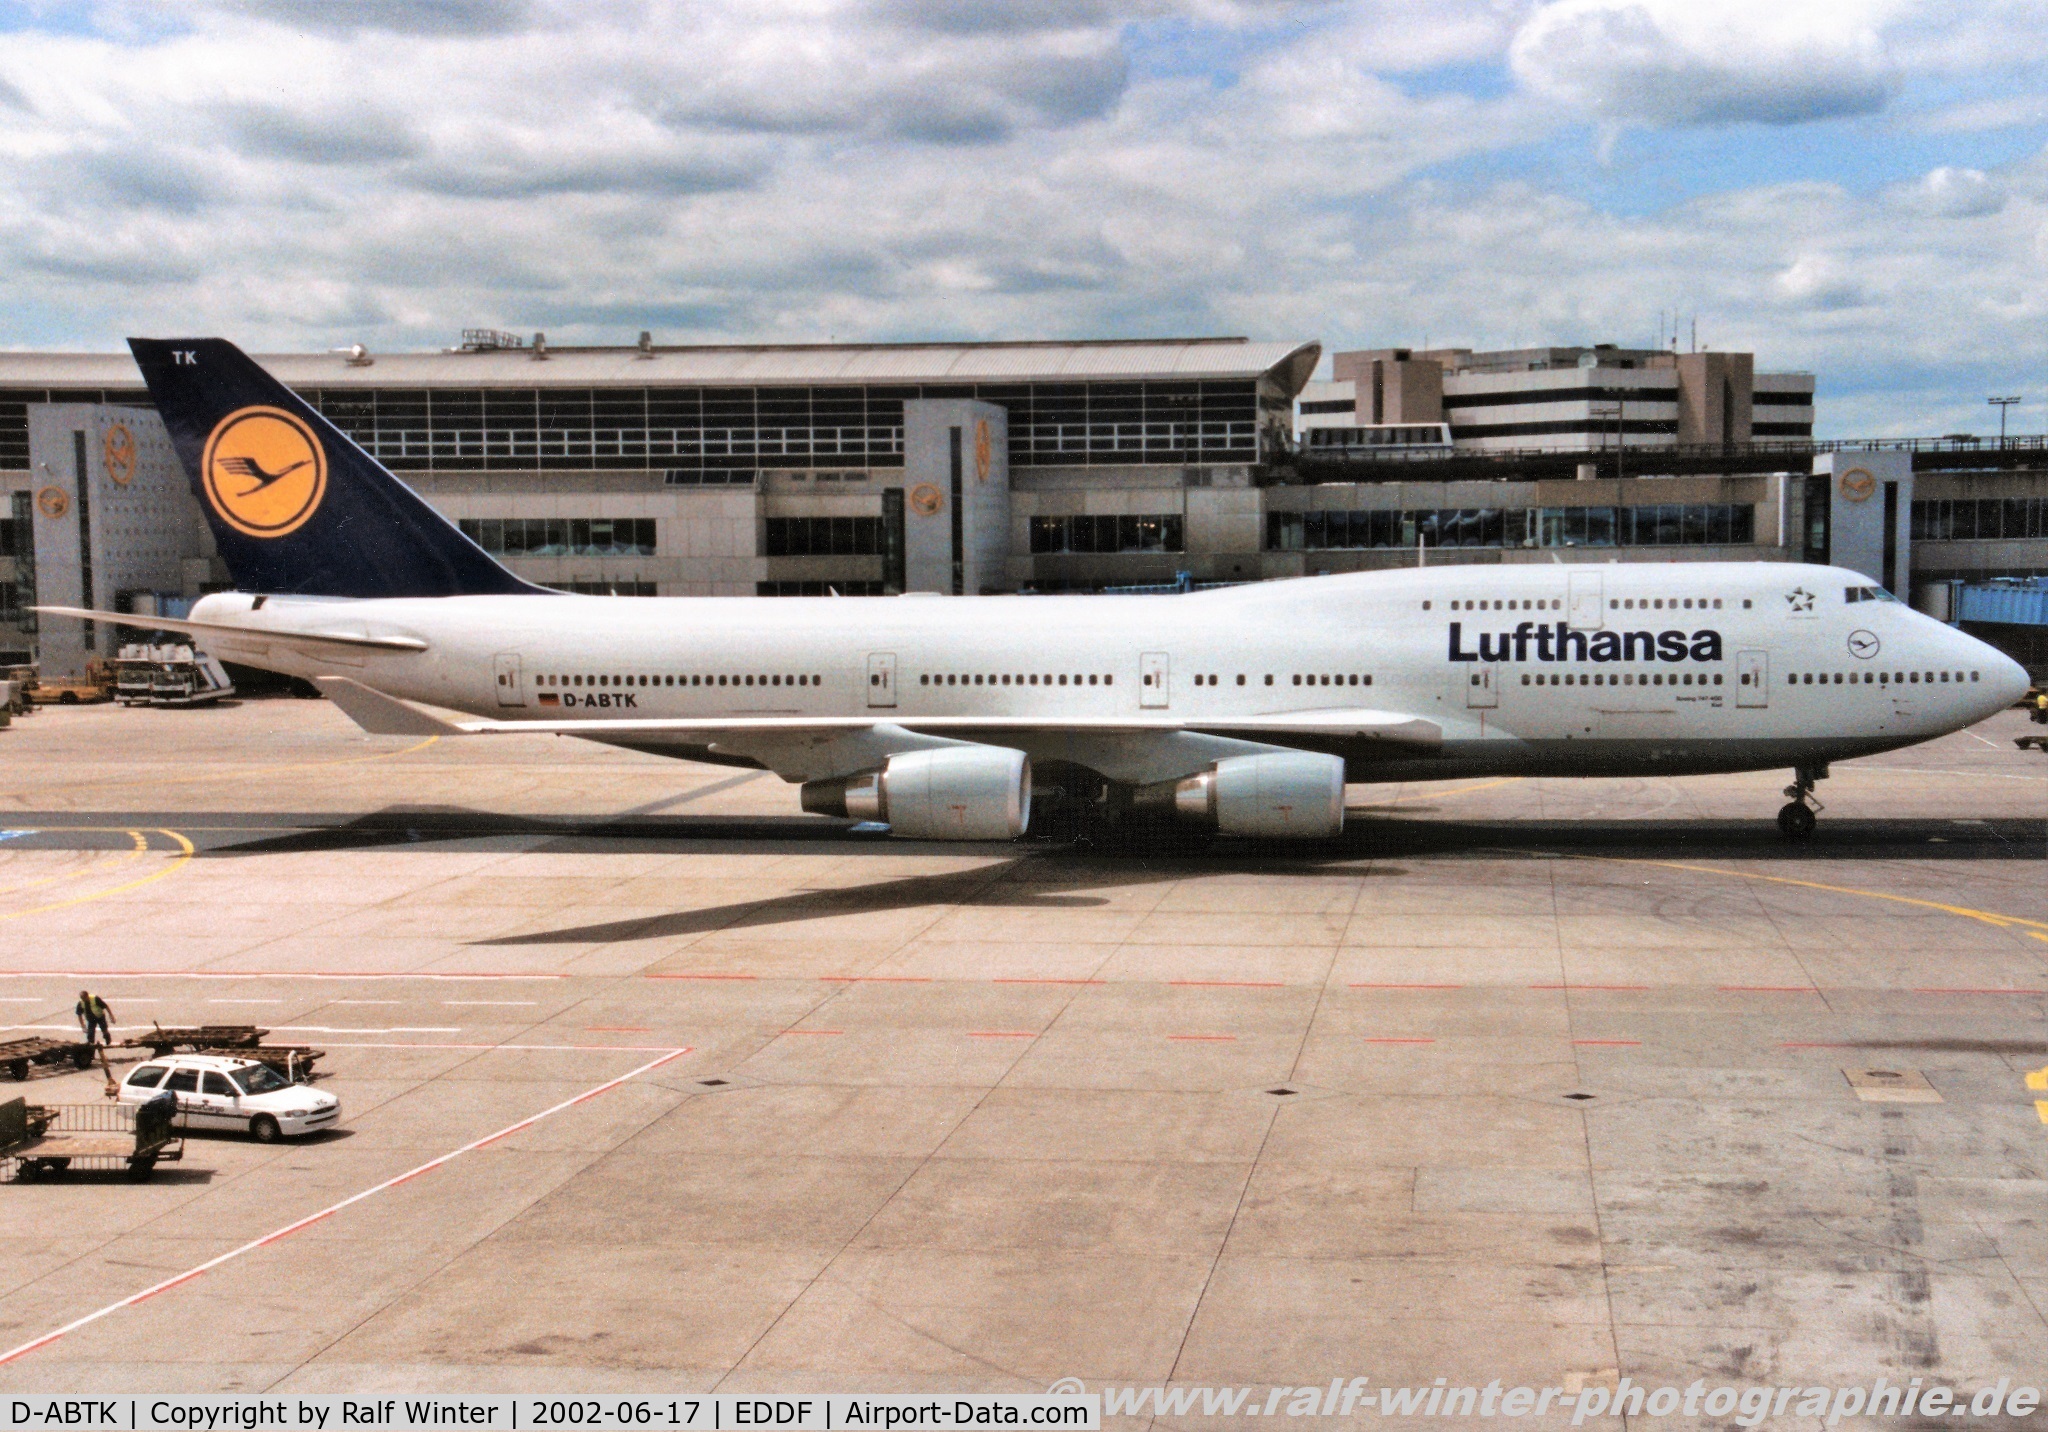 D-ABTK, 2001 Boeing 747-430 C/N 29871, Boeing 747-430 - LH DLH Lufthansa 'Kiel' - 29871 - D-ABTK - 06.2002 - FRA